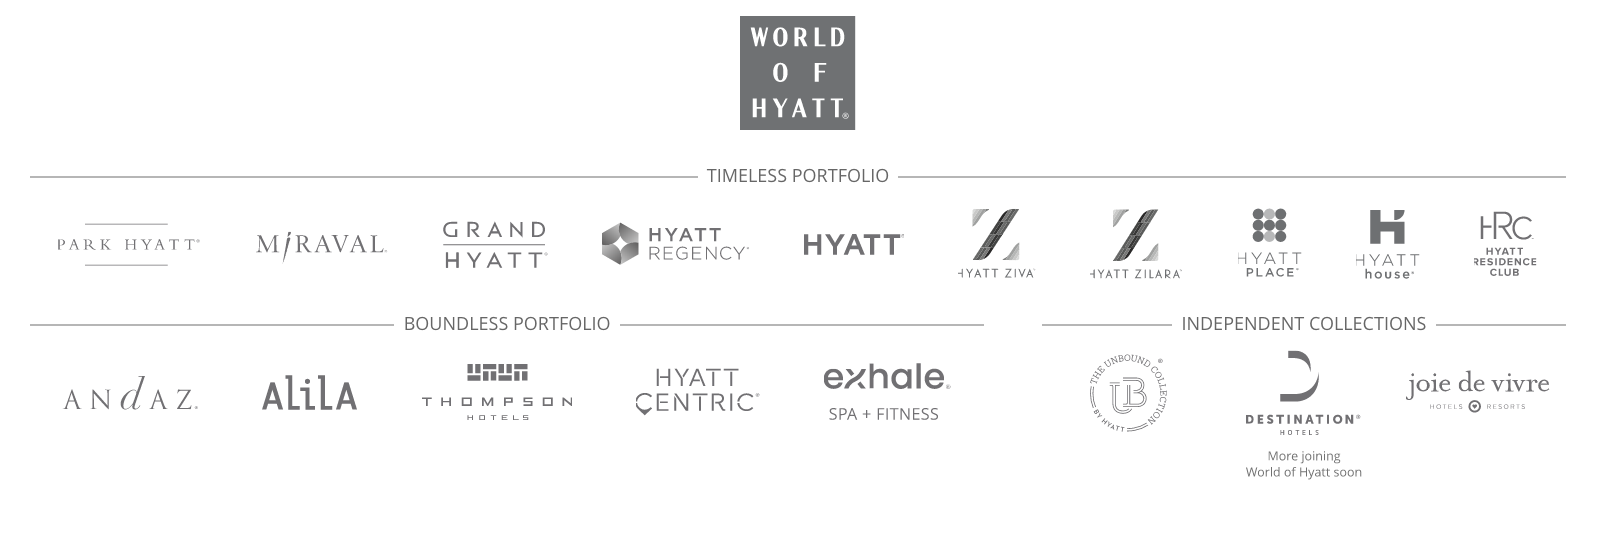 hyatt hotel brands include almost 20 hotels within the hyatt chain